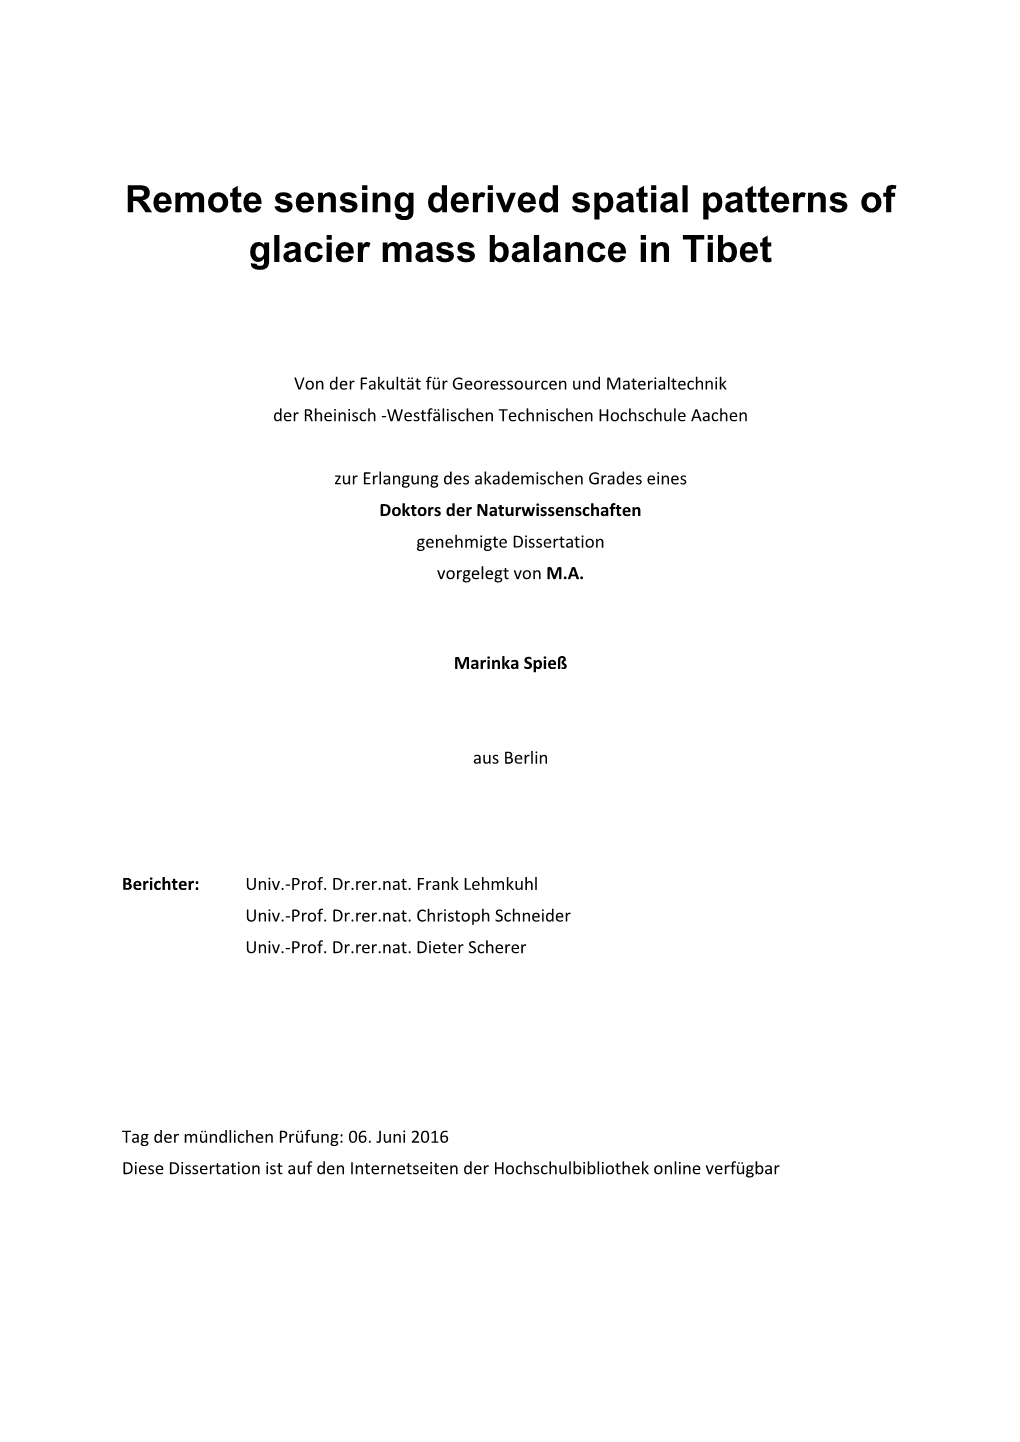 Remote Sensing Derived Spatial Patterns of Glacier Mass Balance in Tibet